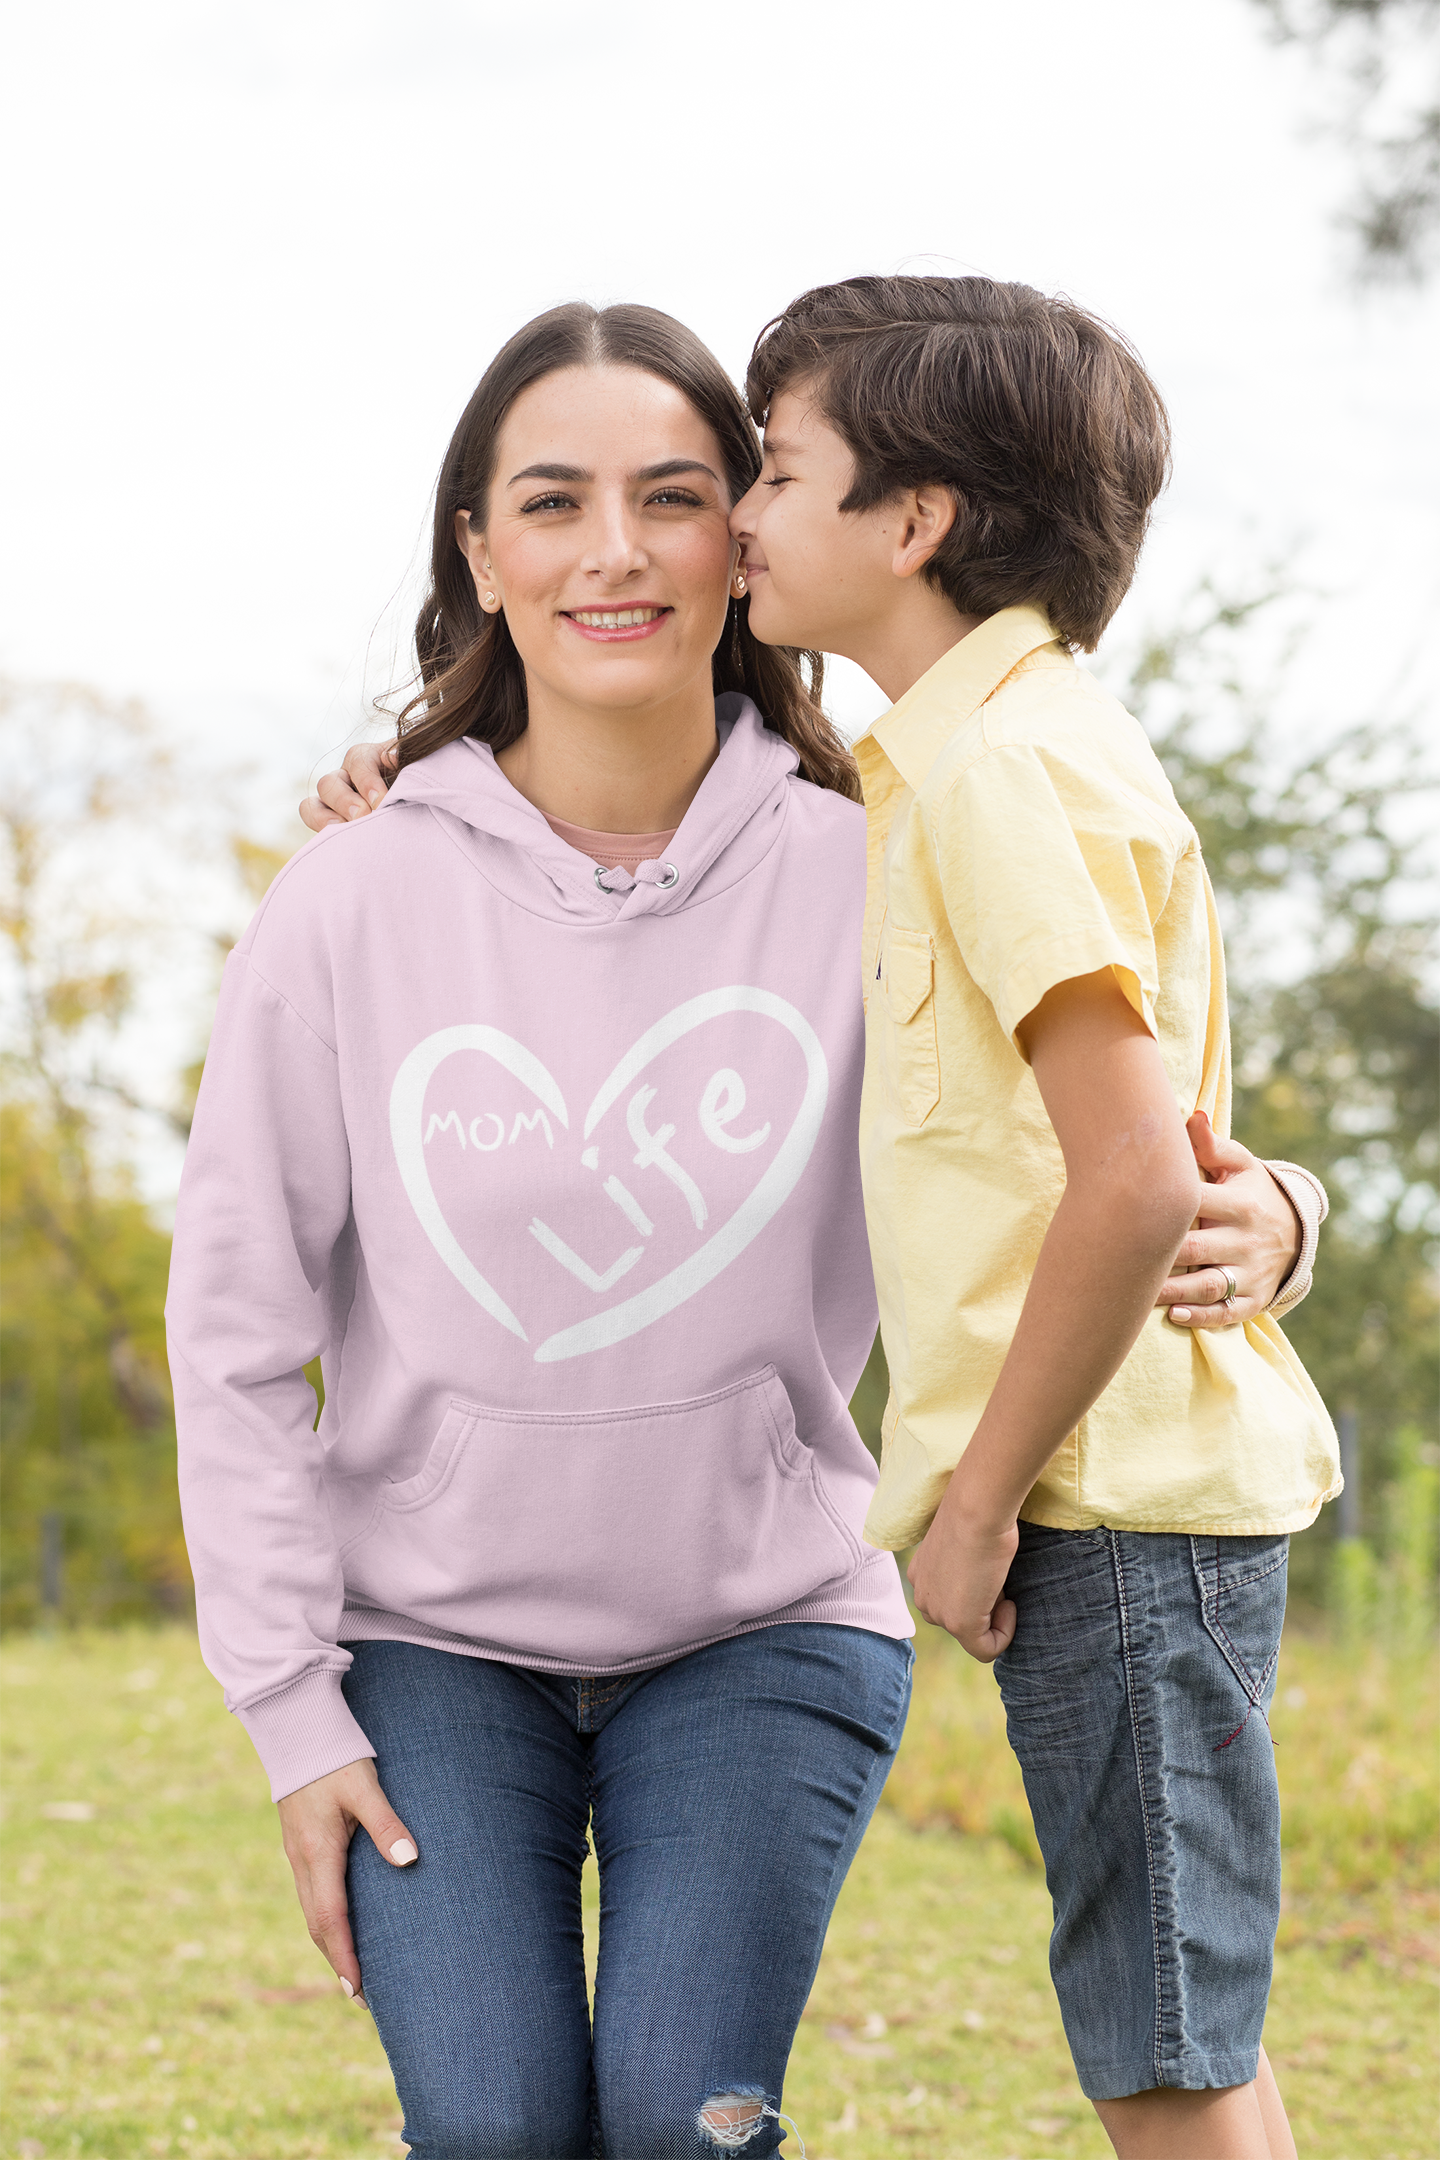 Mom Life Women's Premium Hoodie: A Heartfelt Tribute to Motherhood 🌷 - Stylish & Cozy Fashion Statement